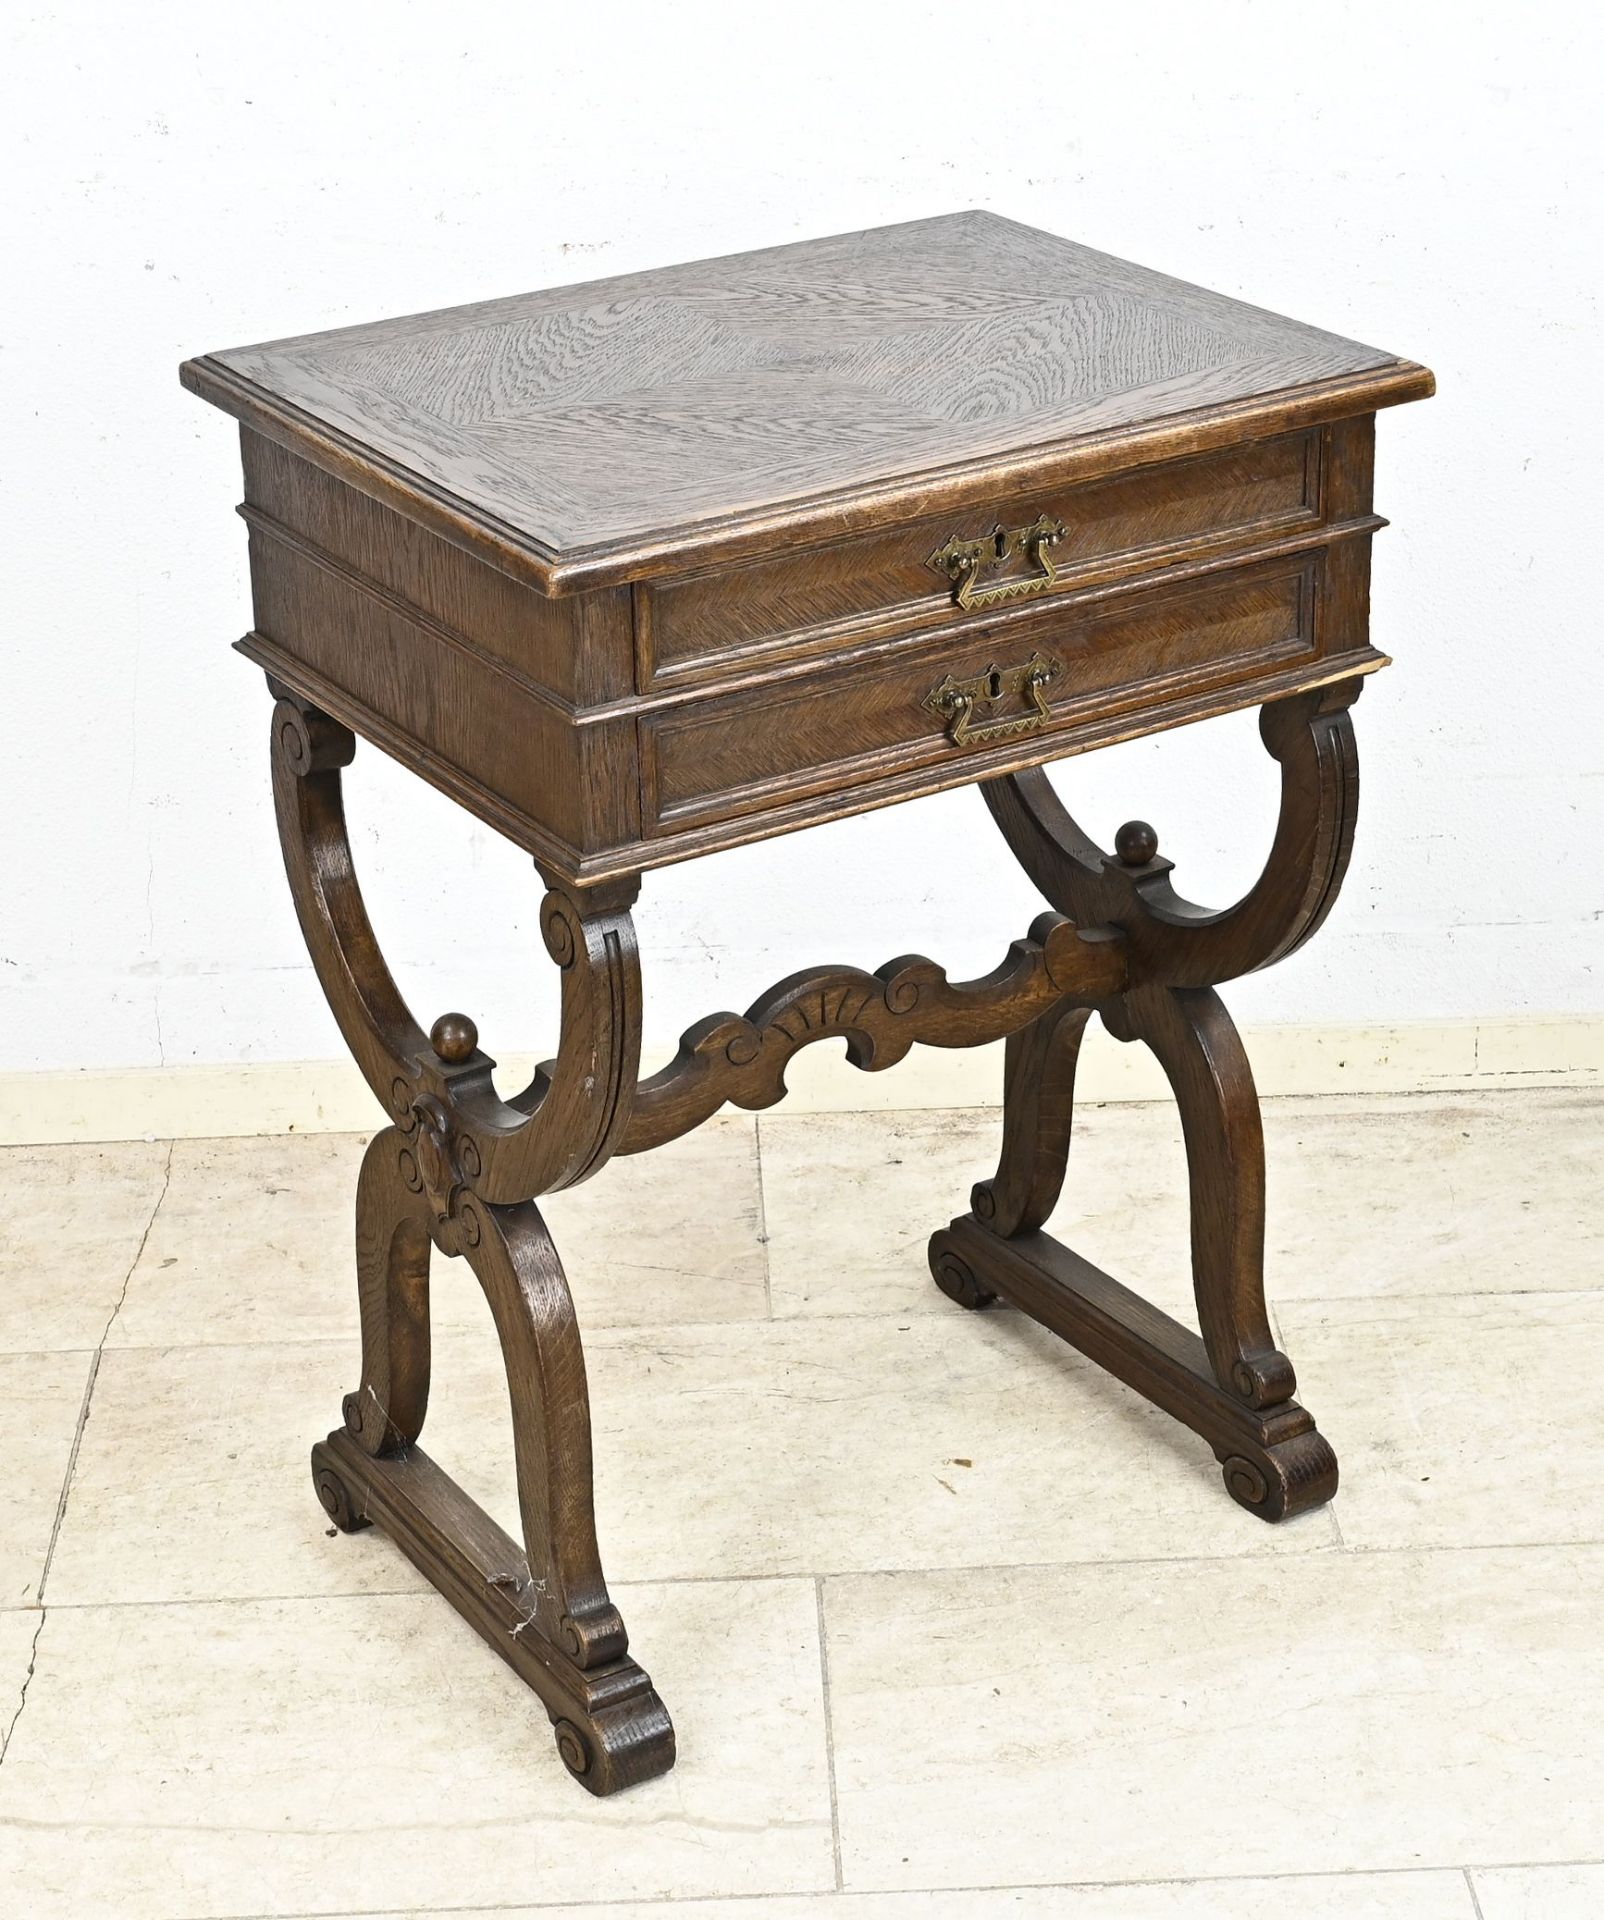 Gründerzeit sewing table, 1880